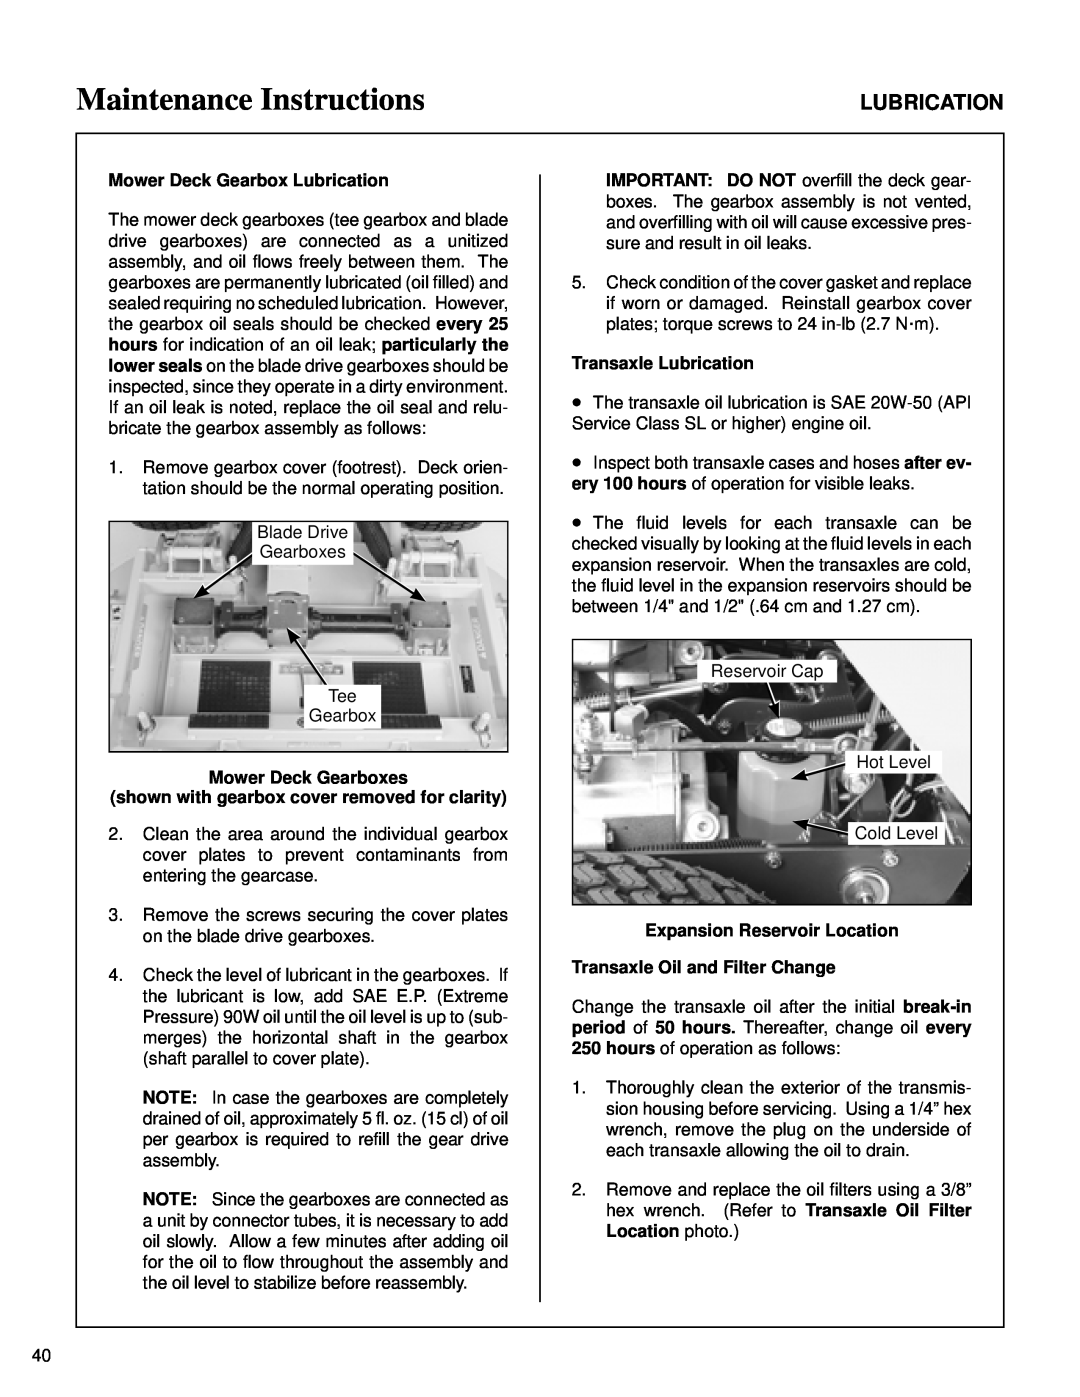 Briggs & Stratton MB (18 HP) Maintenance Instructions, Mower Deck Gearbox Lubrication, Transaxle Lubrication 